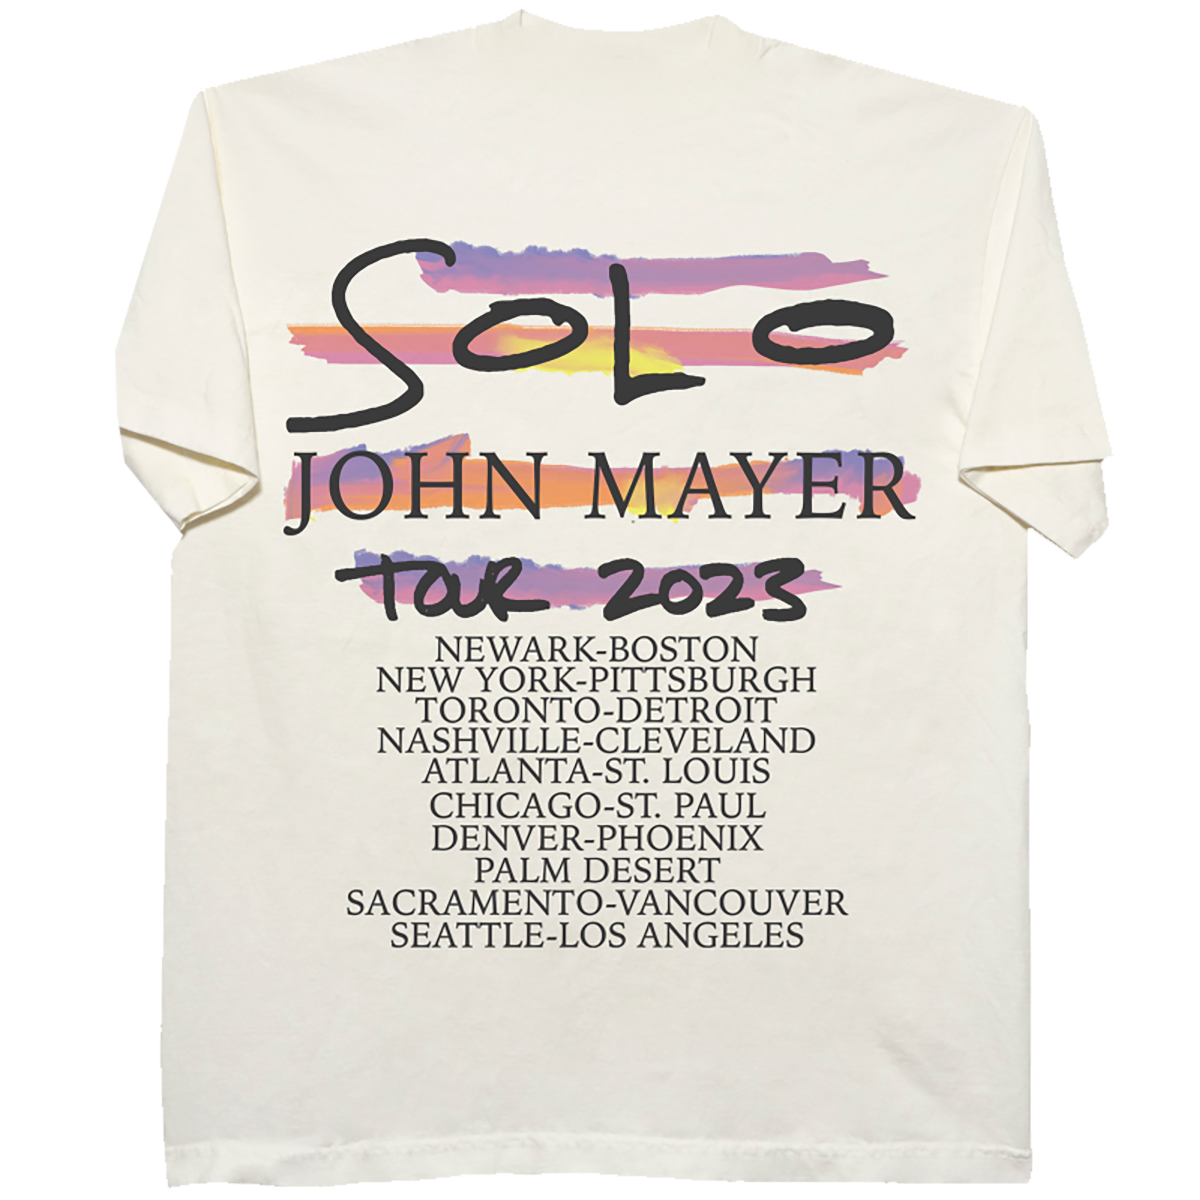 John Mayer John Mayer Solo Tour White Photo Tee